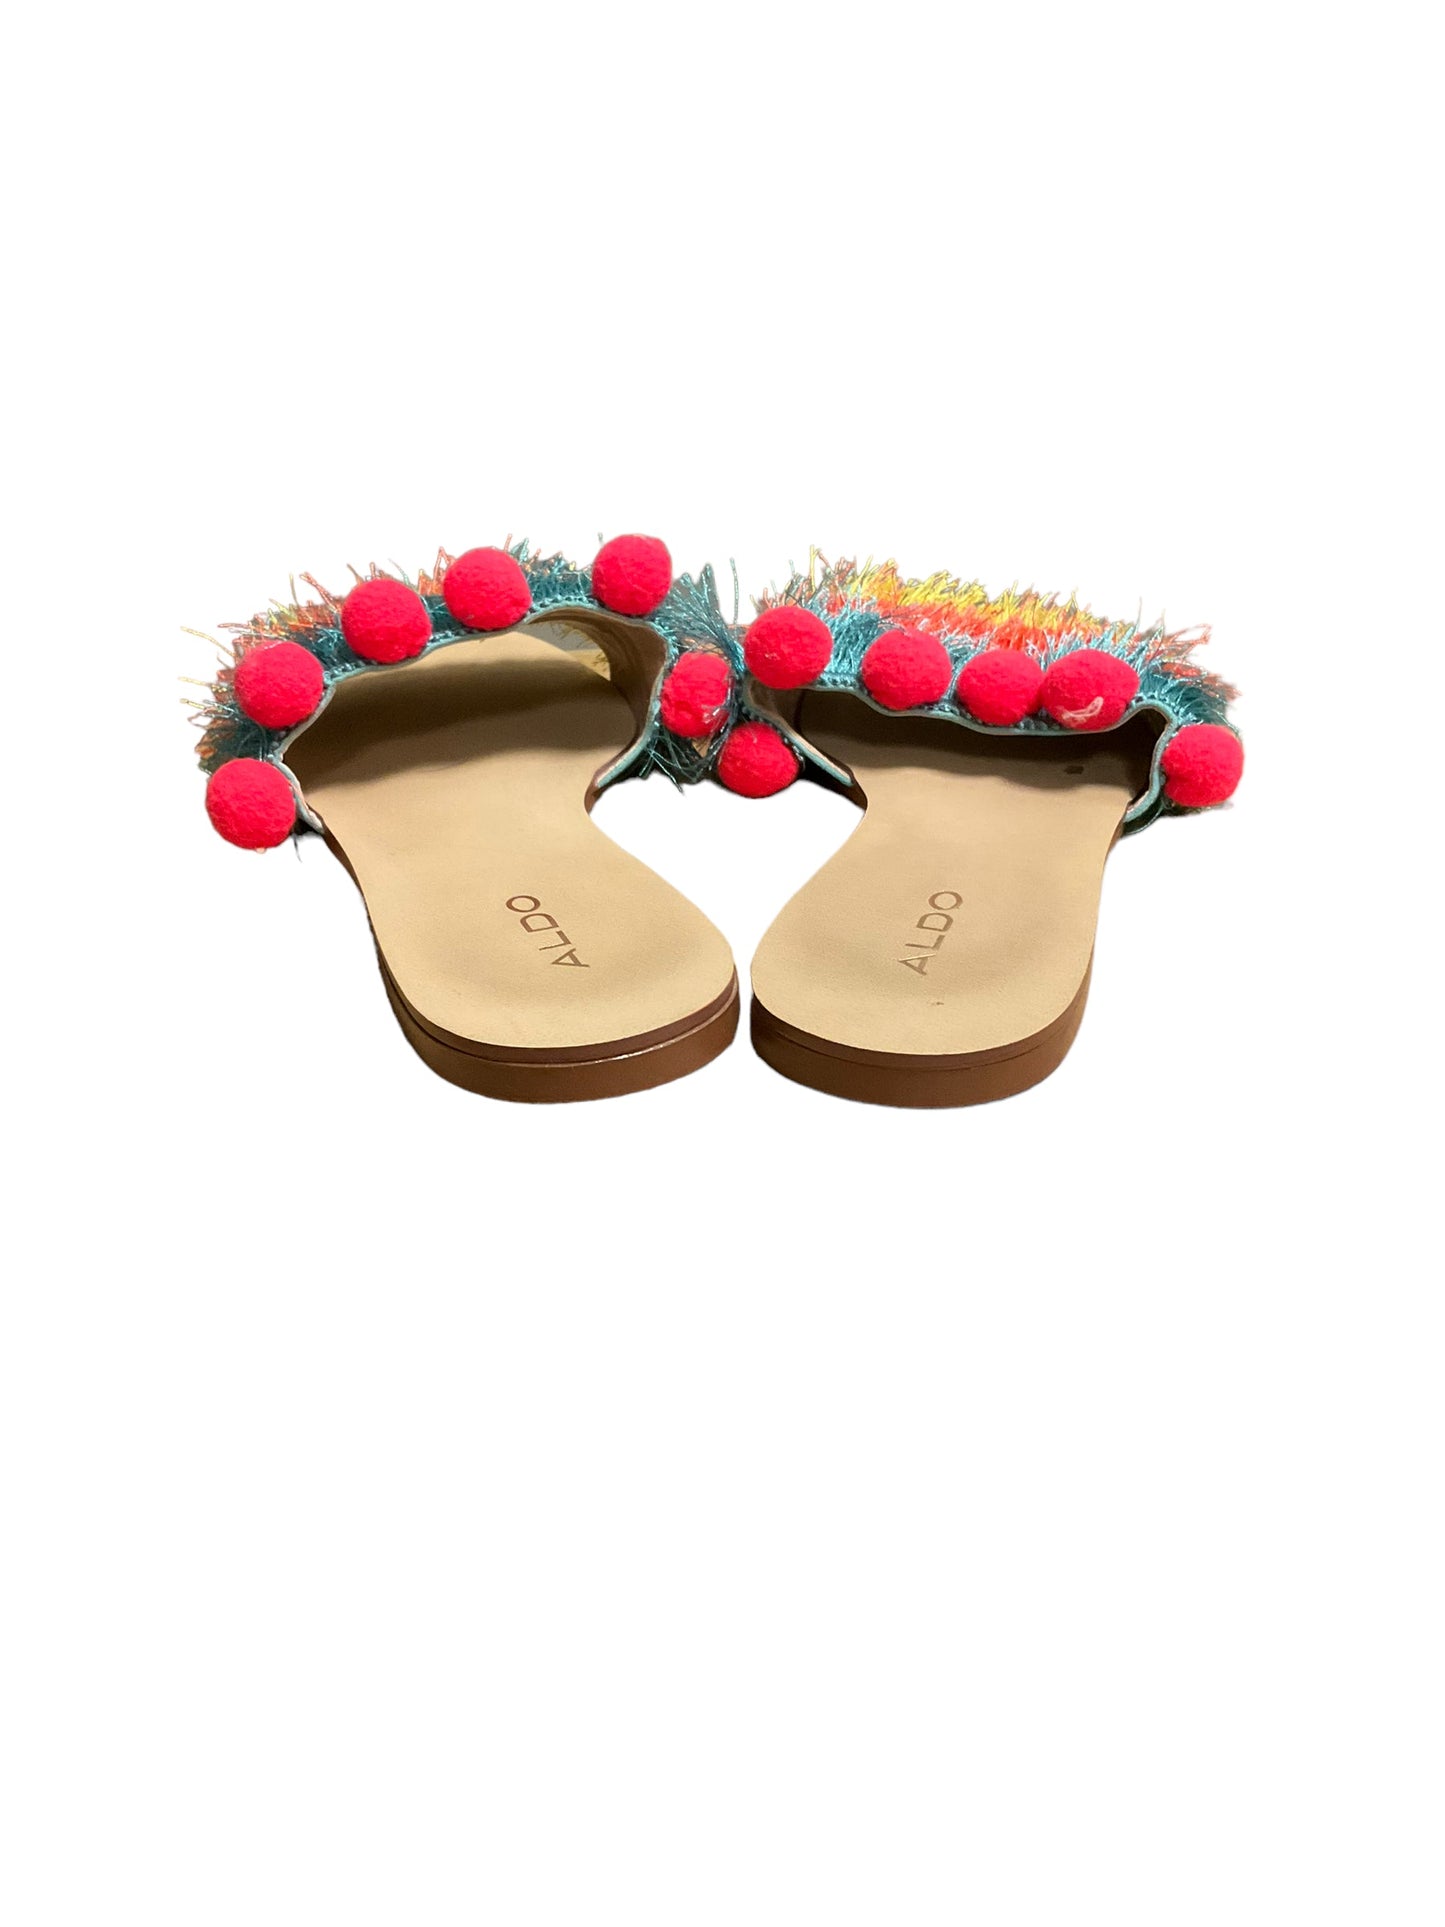 Multi-colored Sandals Flip Flops Aldo, Size 6